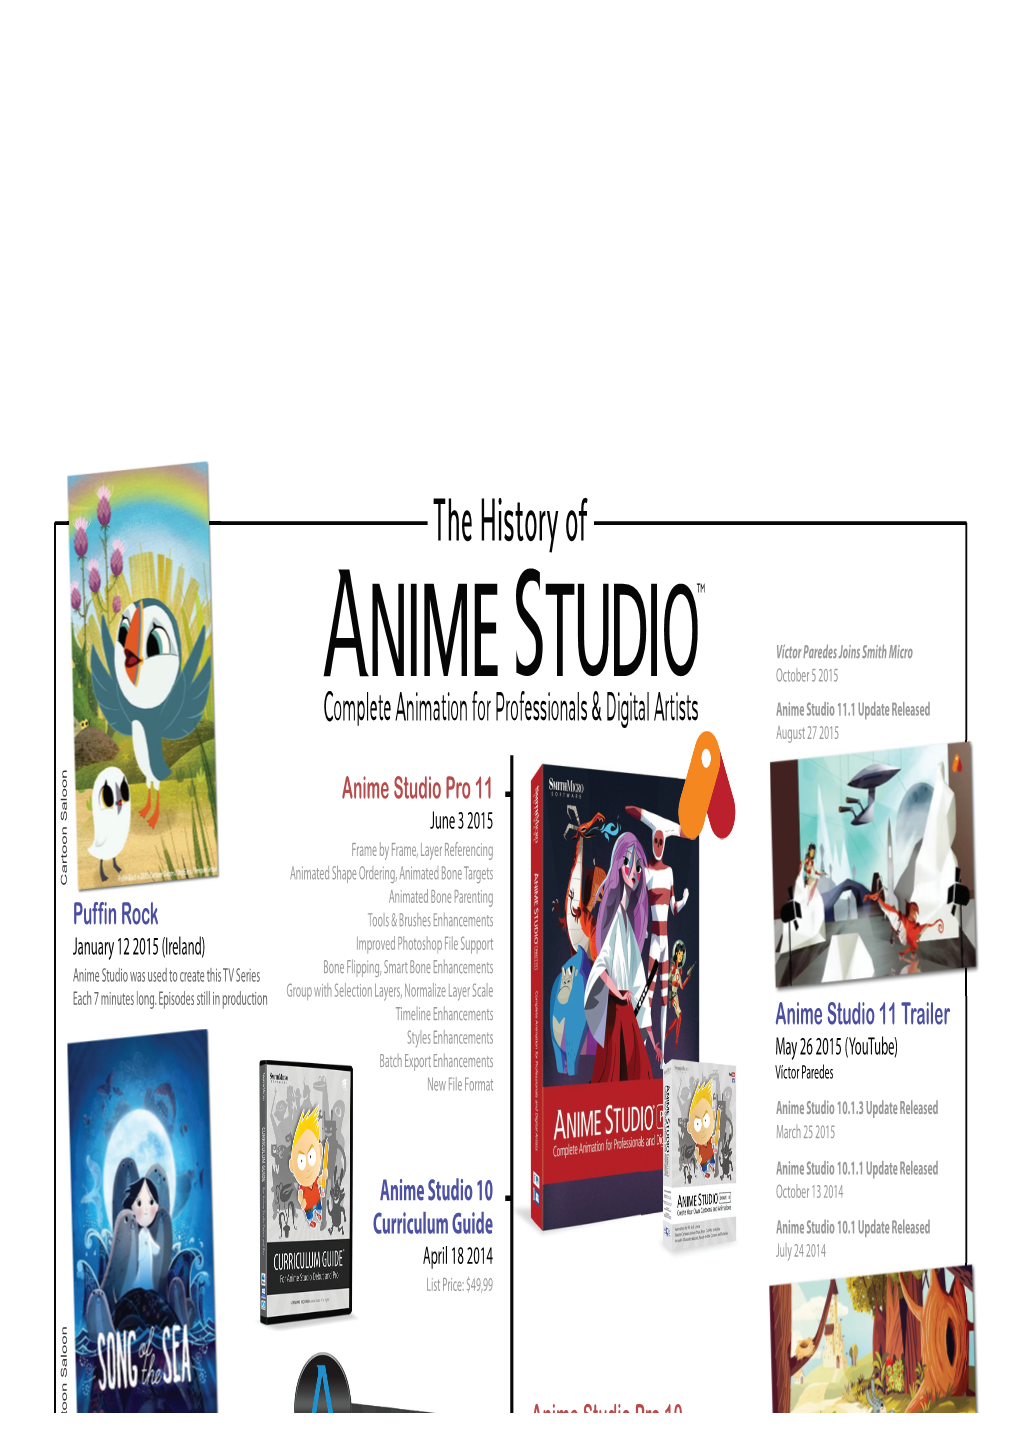 The History of Anime Studio